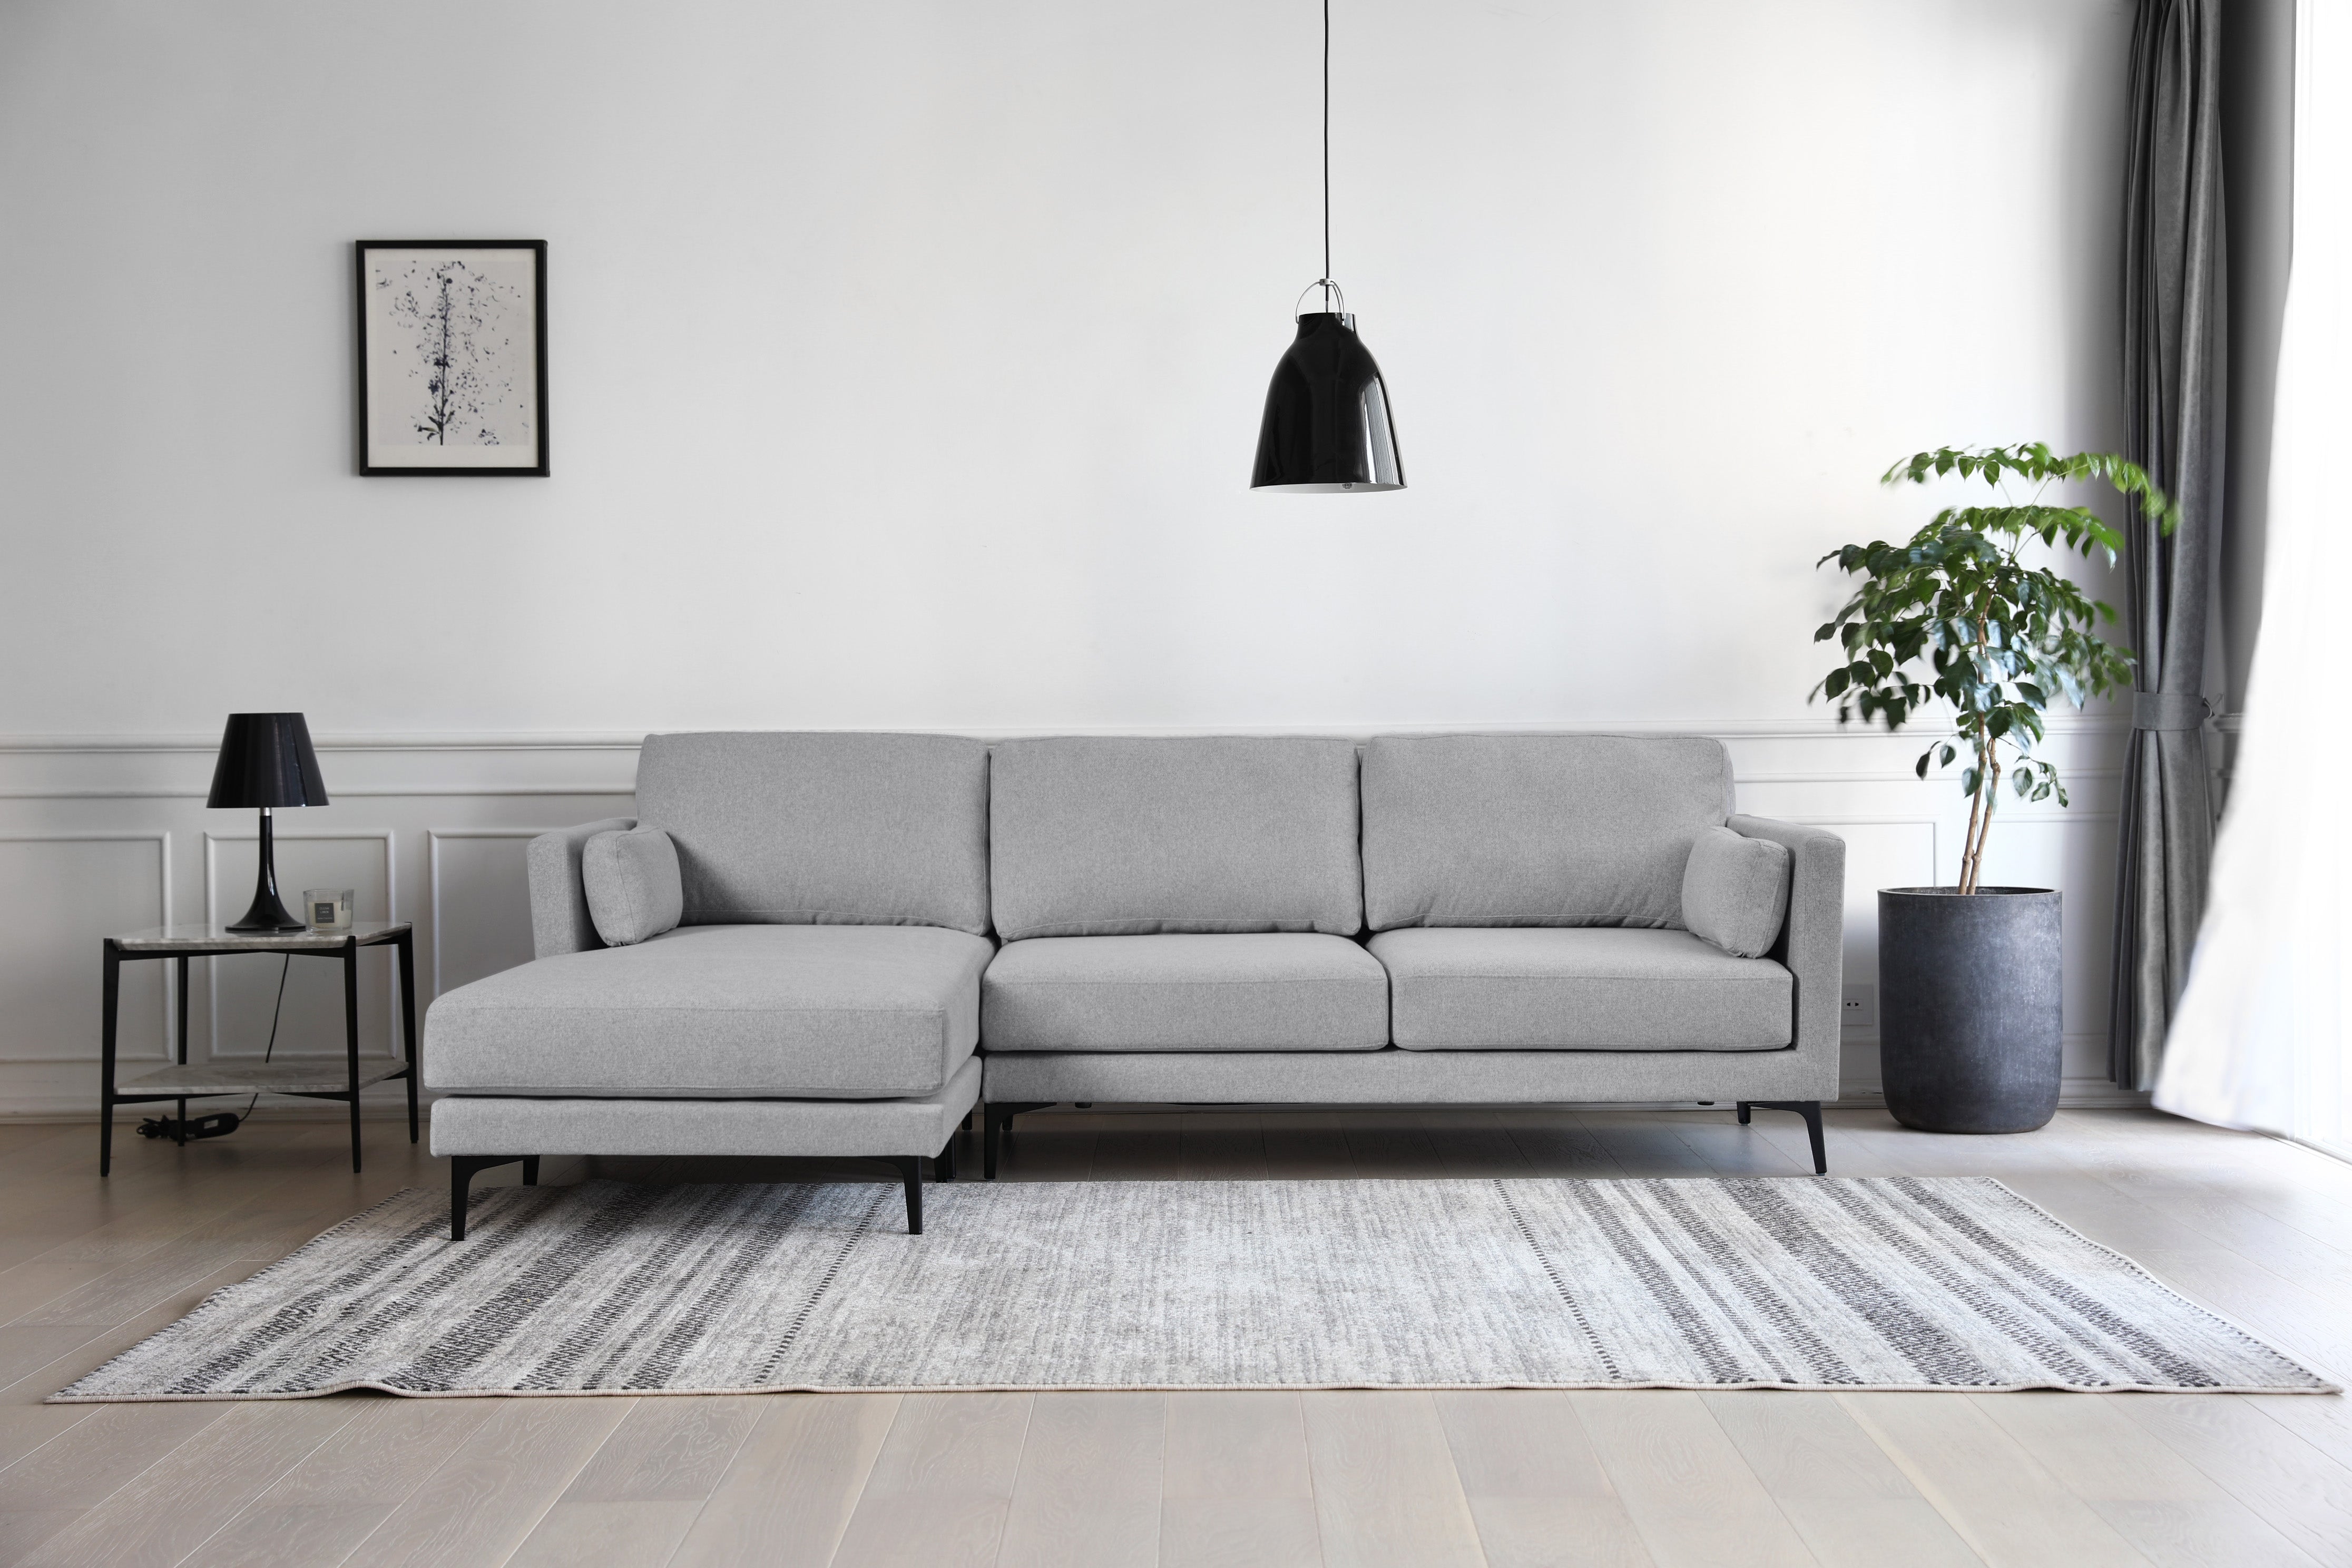 Sofa chaise Longue 3plazas tela gris Nil – Mueblestudio